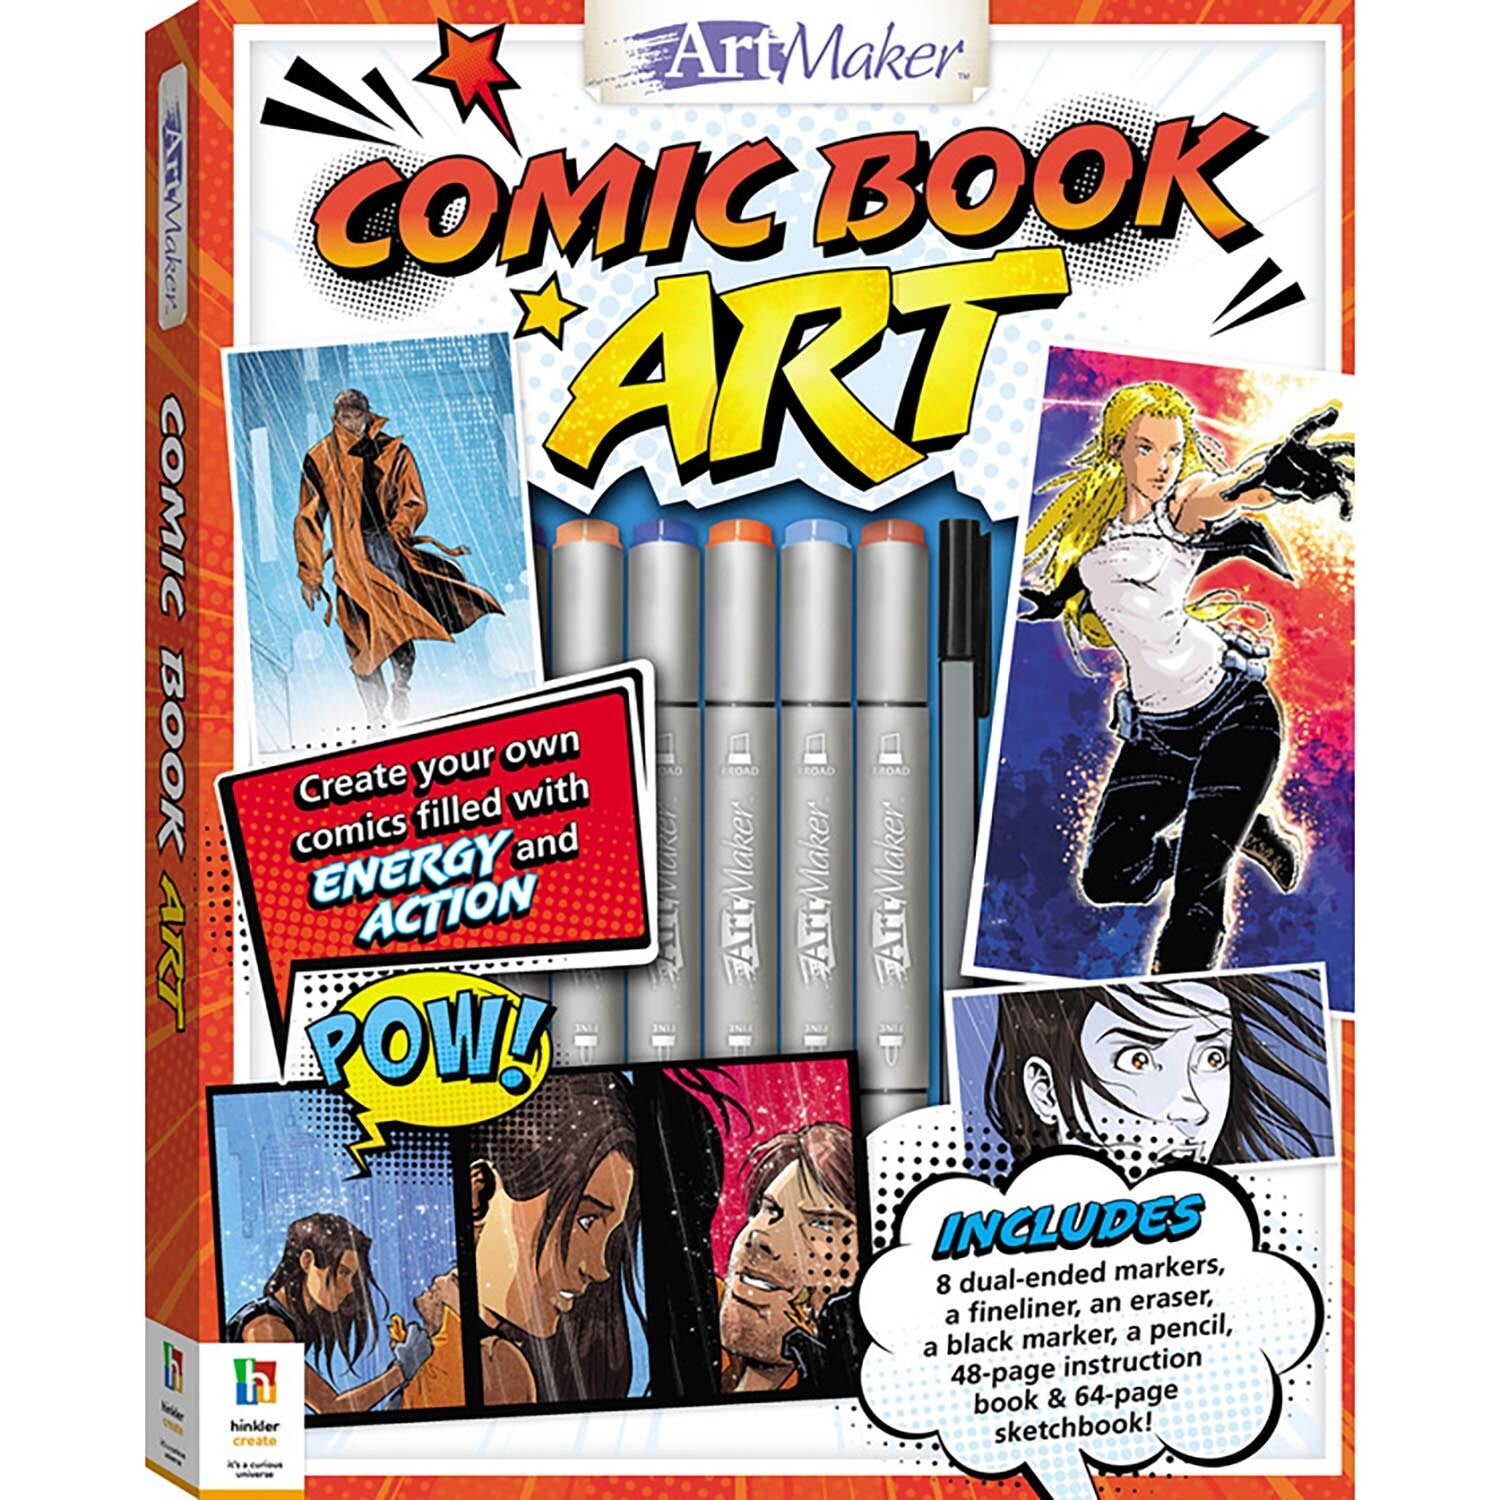 Comic Book Kit